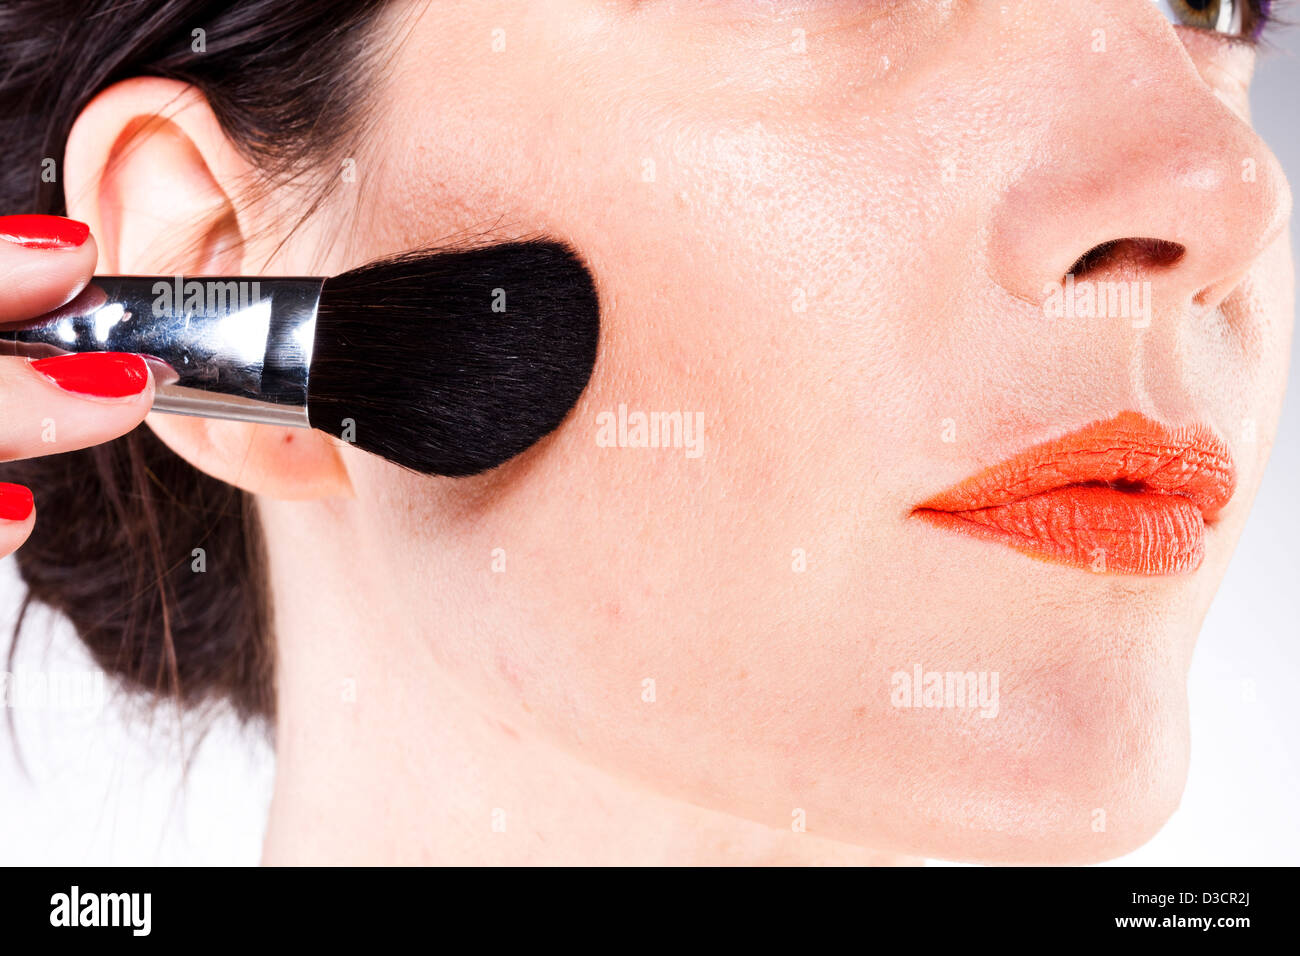 Woman applying blusher with blusher brush Stock Photo